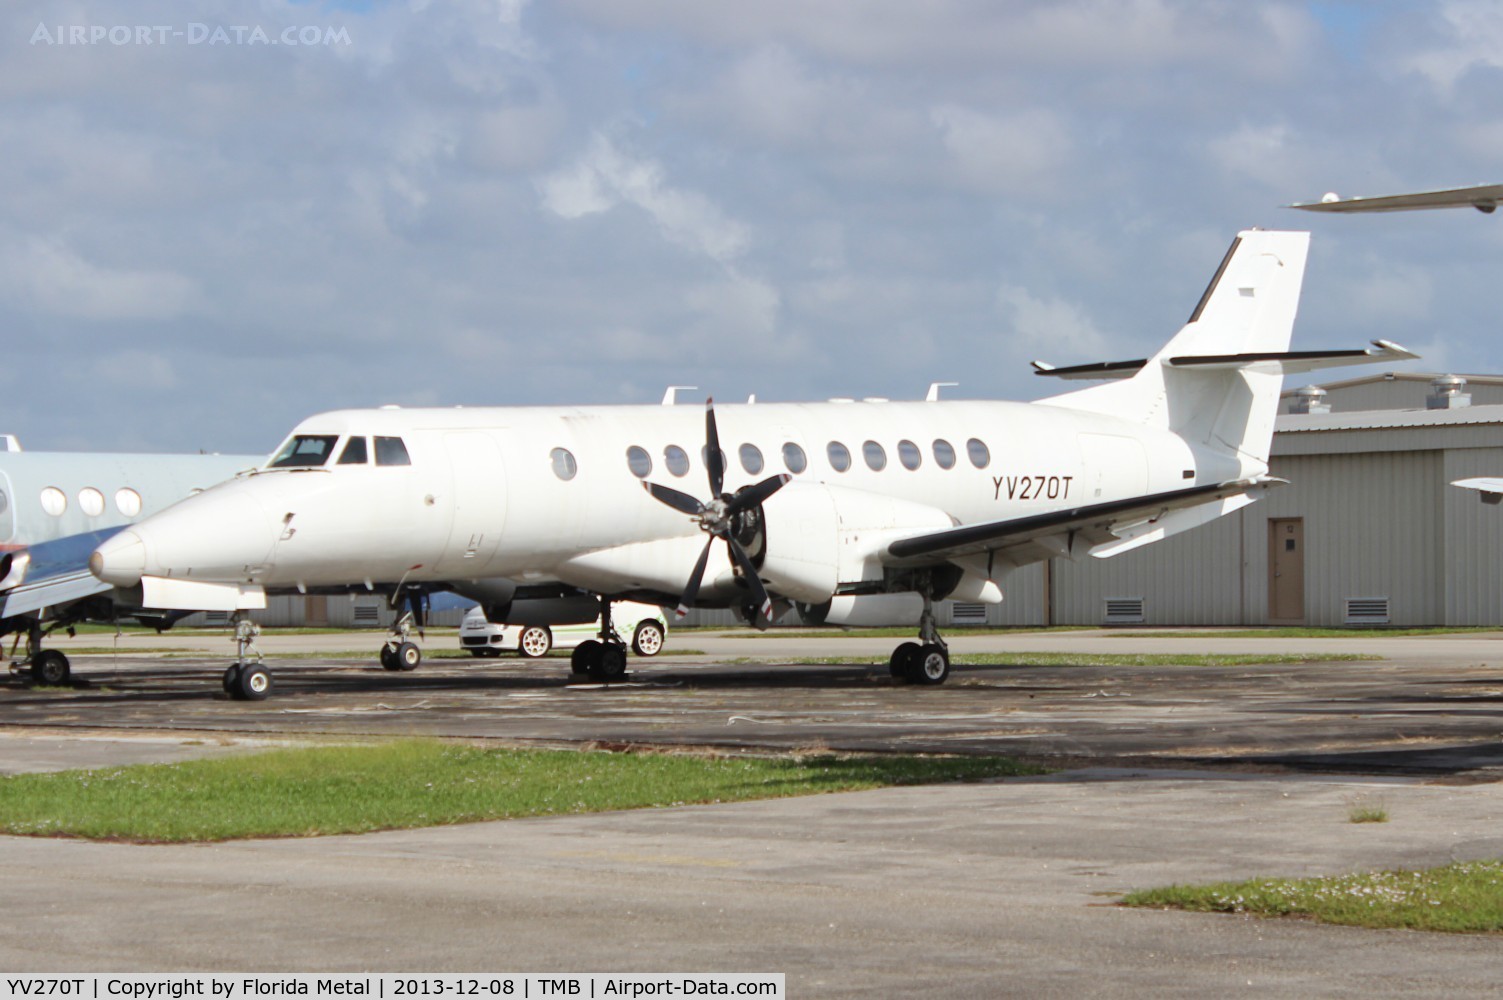 YV270T, 1997 British Aerospace Jetstream 4101 C/N 41097, Former Atlantic Coast (United Express) now untitled but going to Venezolana Airlines of Venezuela